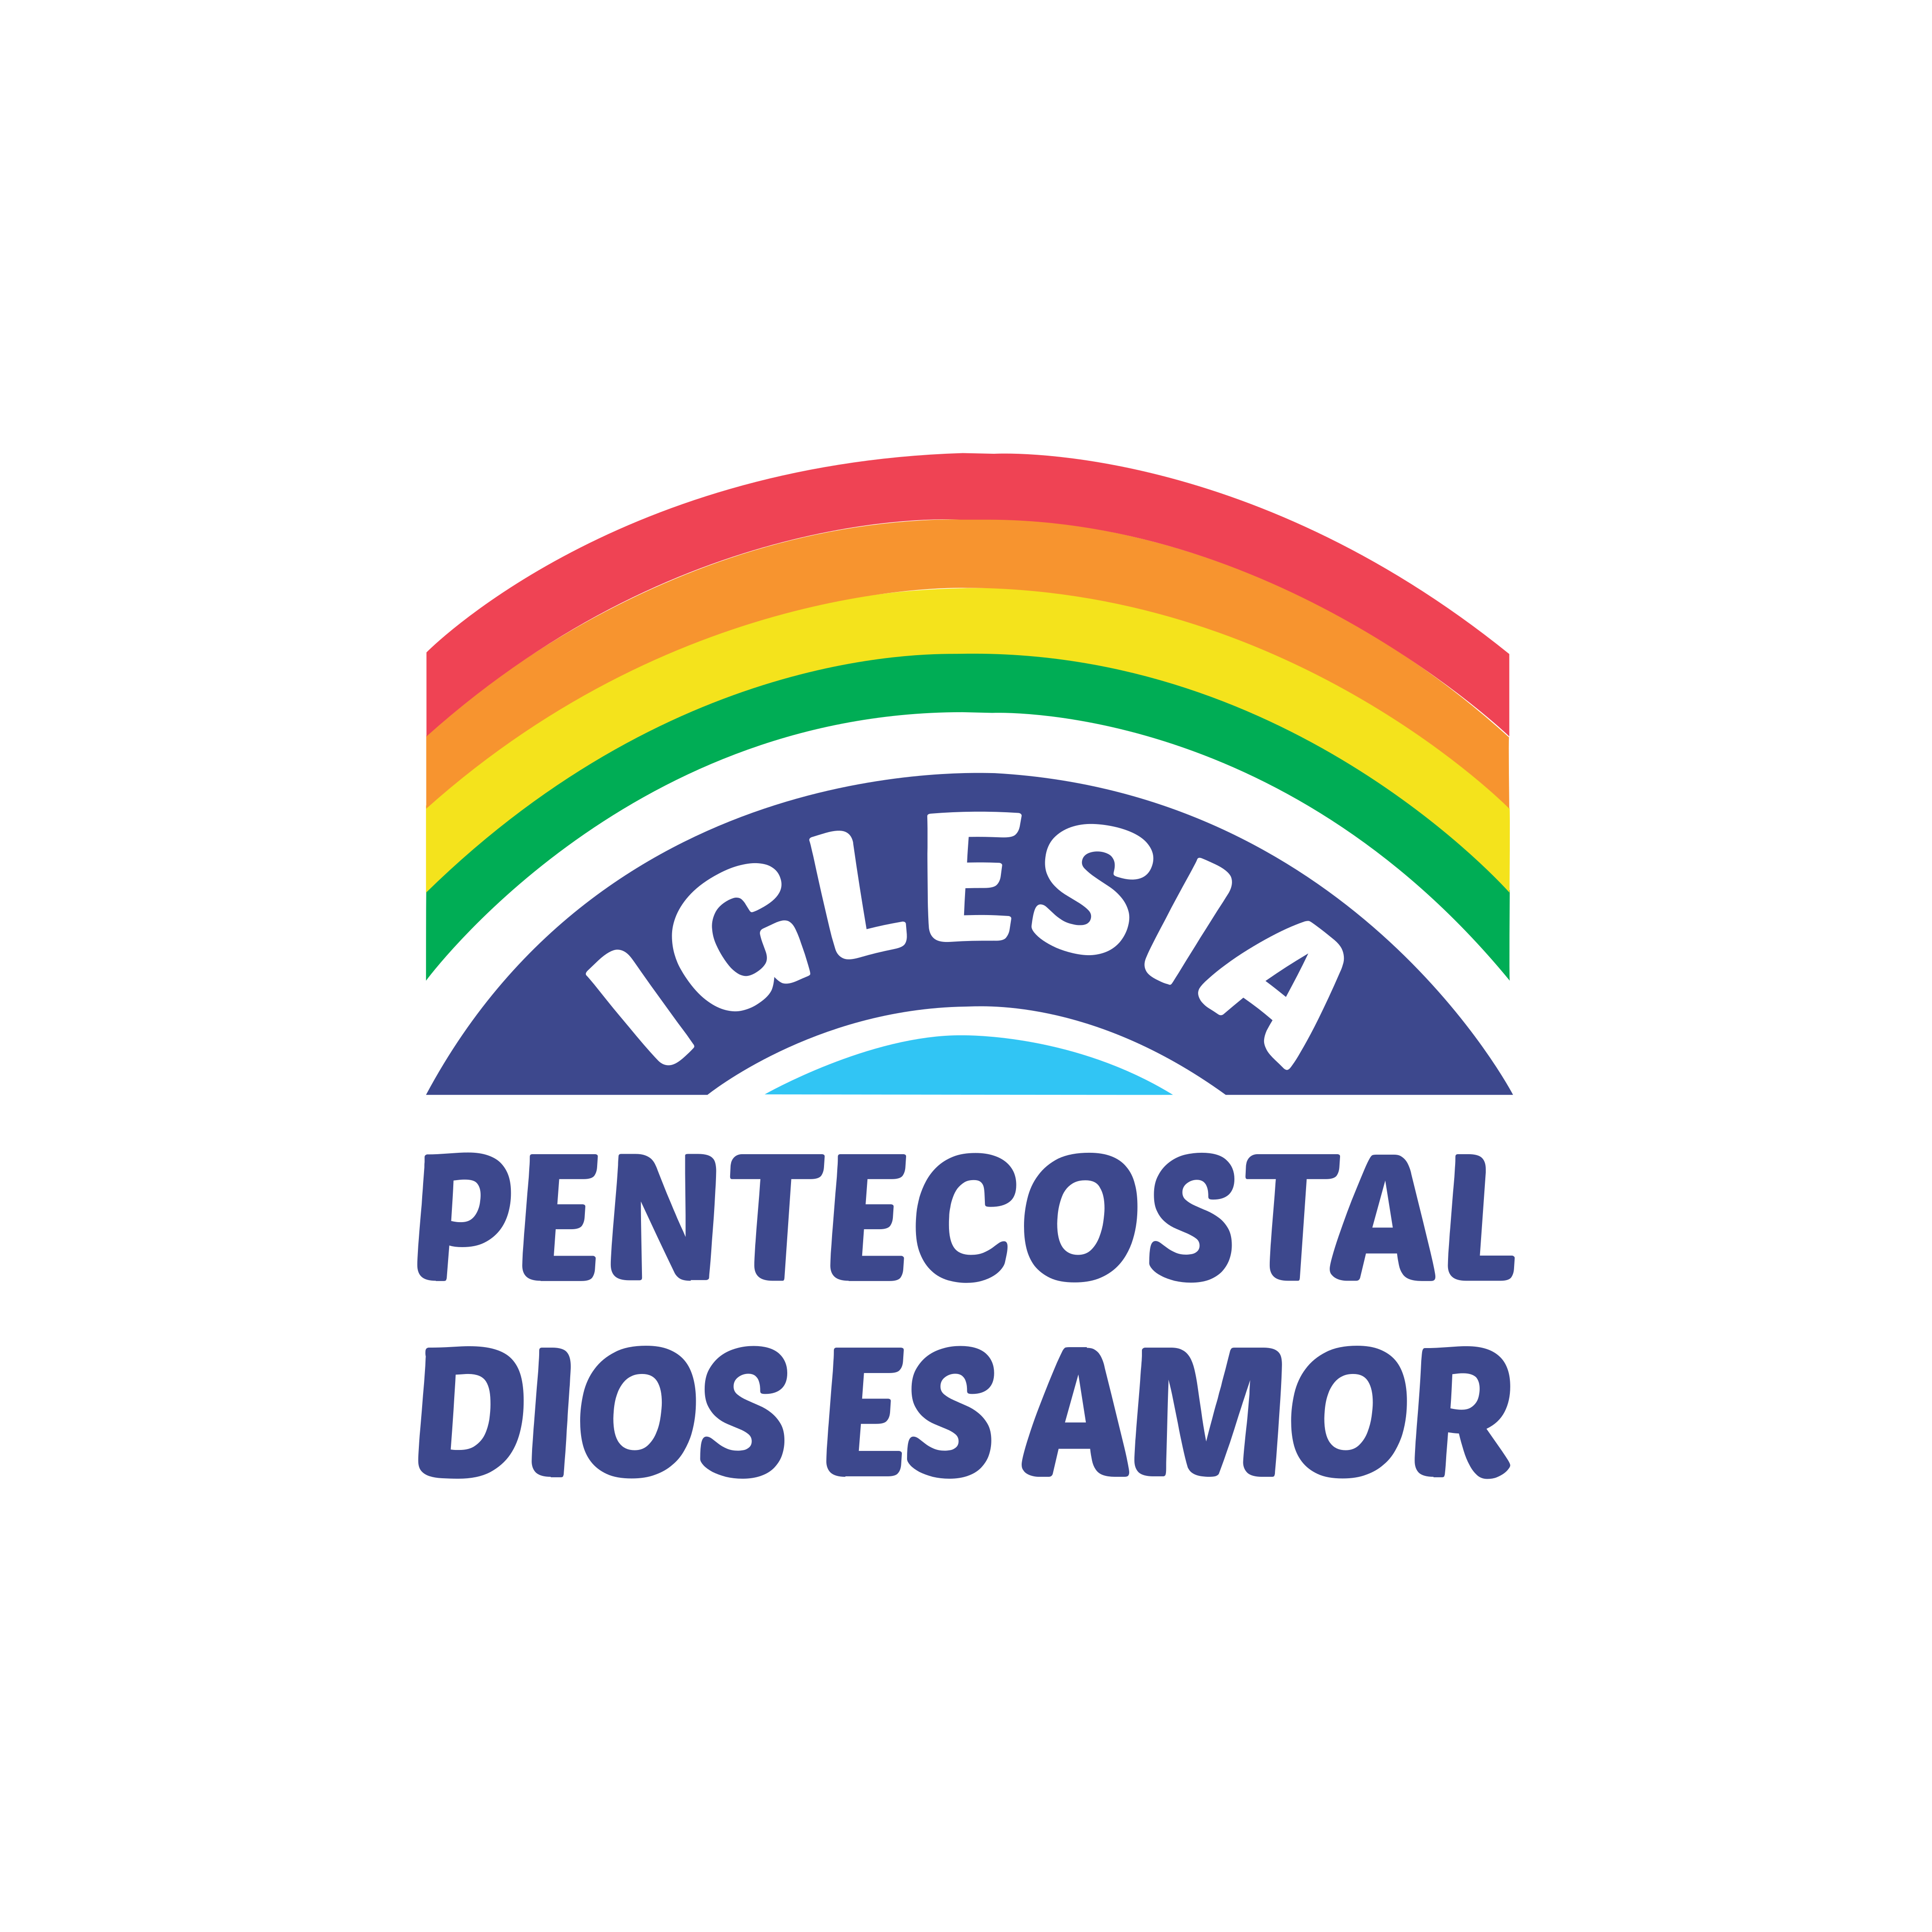 Dios es Amor Logo PNG.